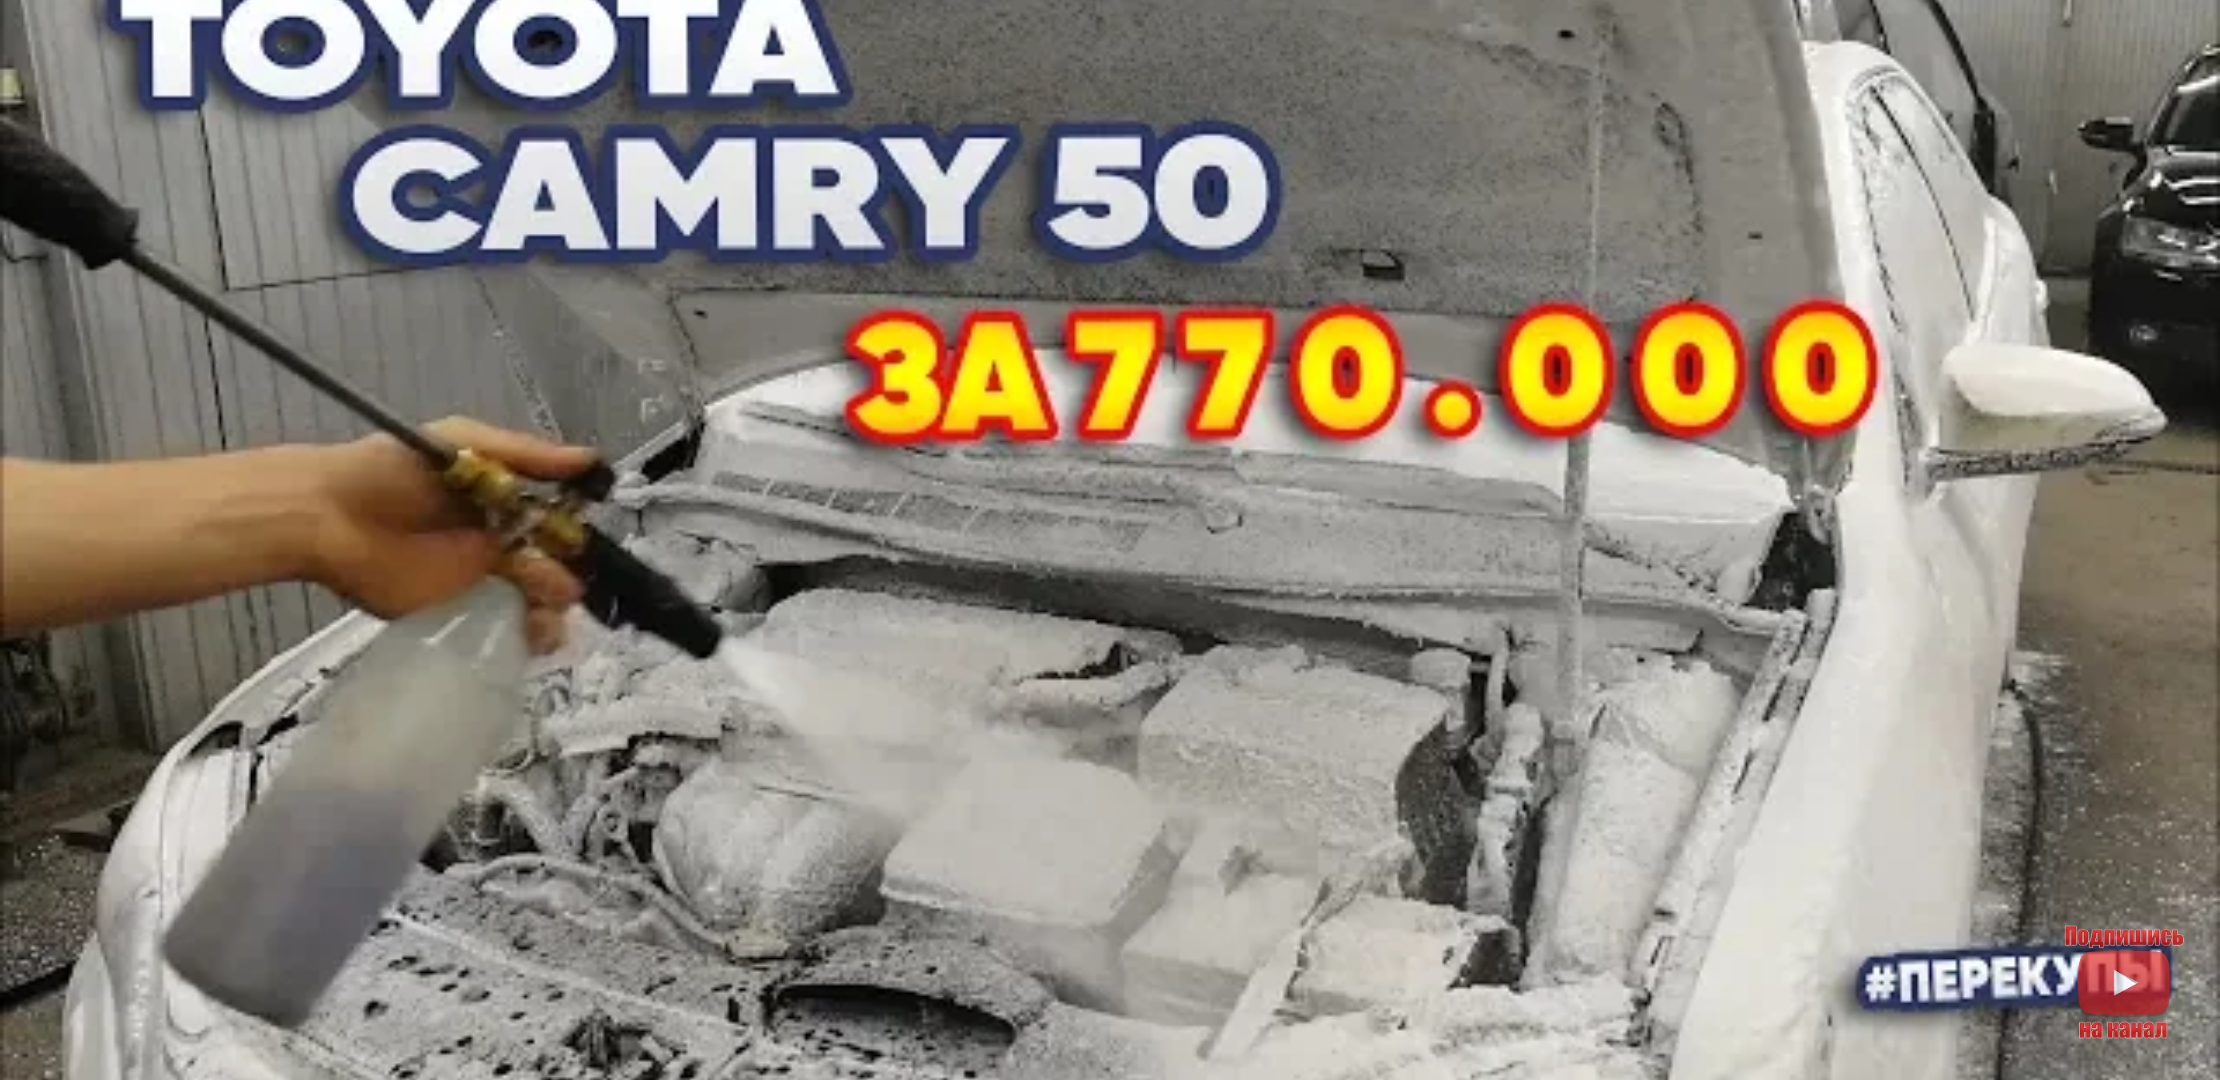 Анонс видео-теста Toyota camry 50 за 770 000р Перекупы авто